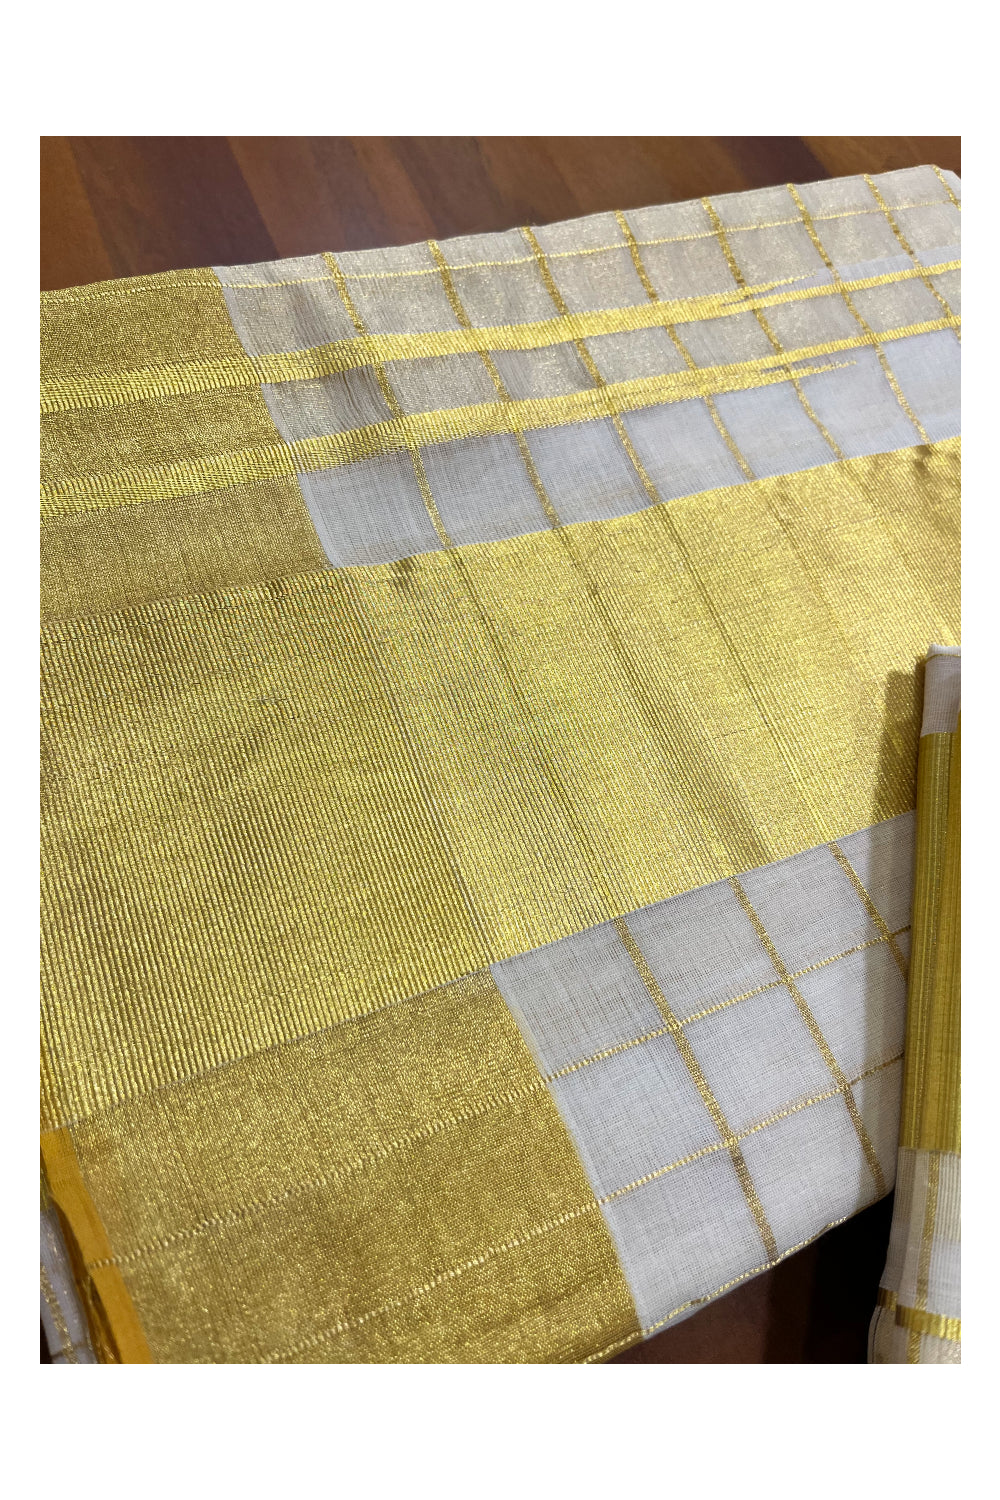 Southloom Super Premium Balaramapuram Handloom Unakkupaavu Cotton Check Design Wedding Pudava Set Mundu (Double)